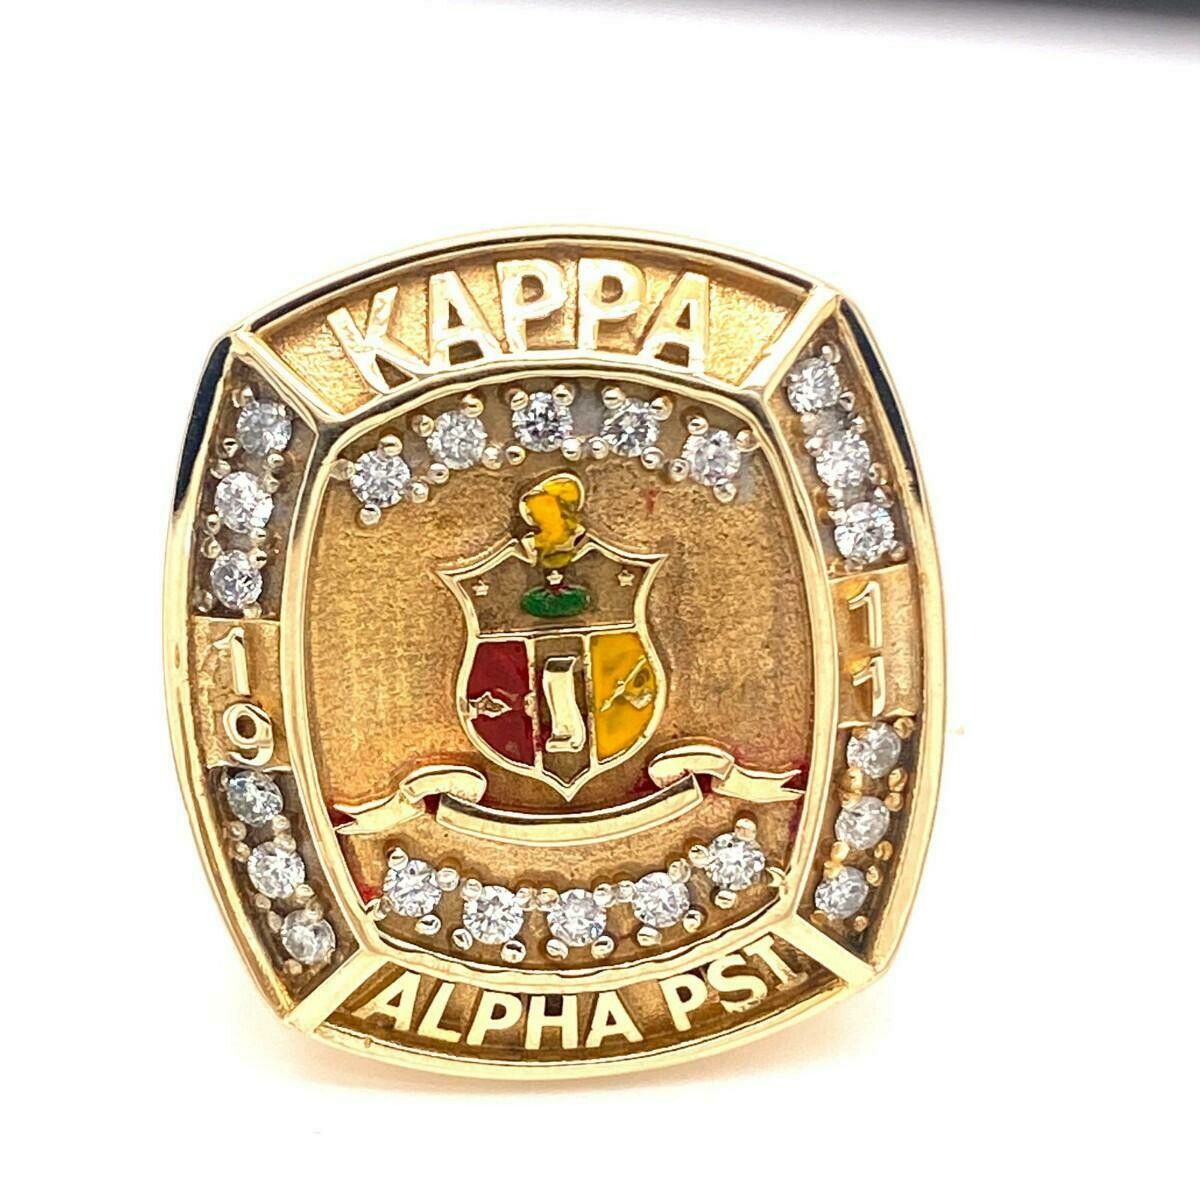 KAPPA ALPHA PSI SHIELD RING - 14K Gold